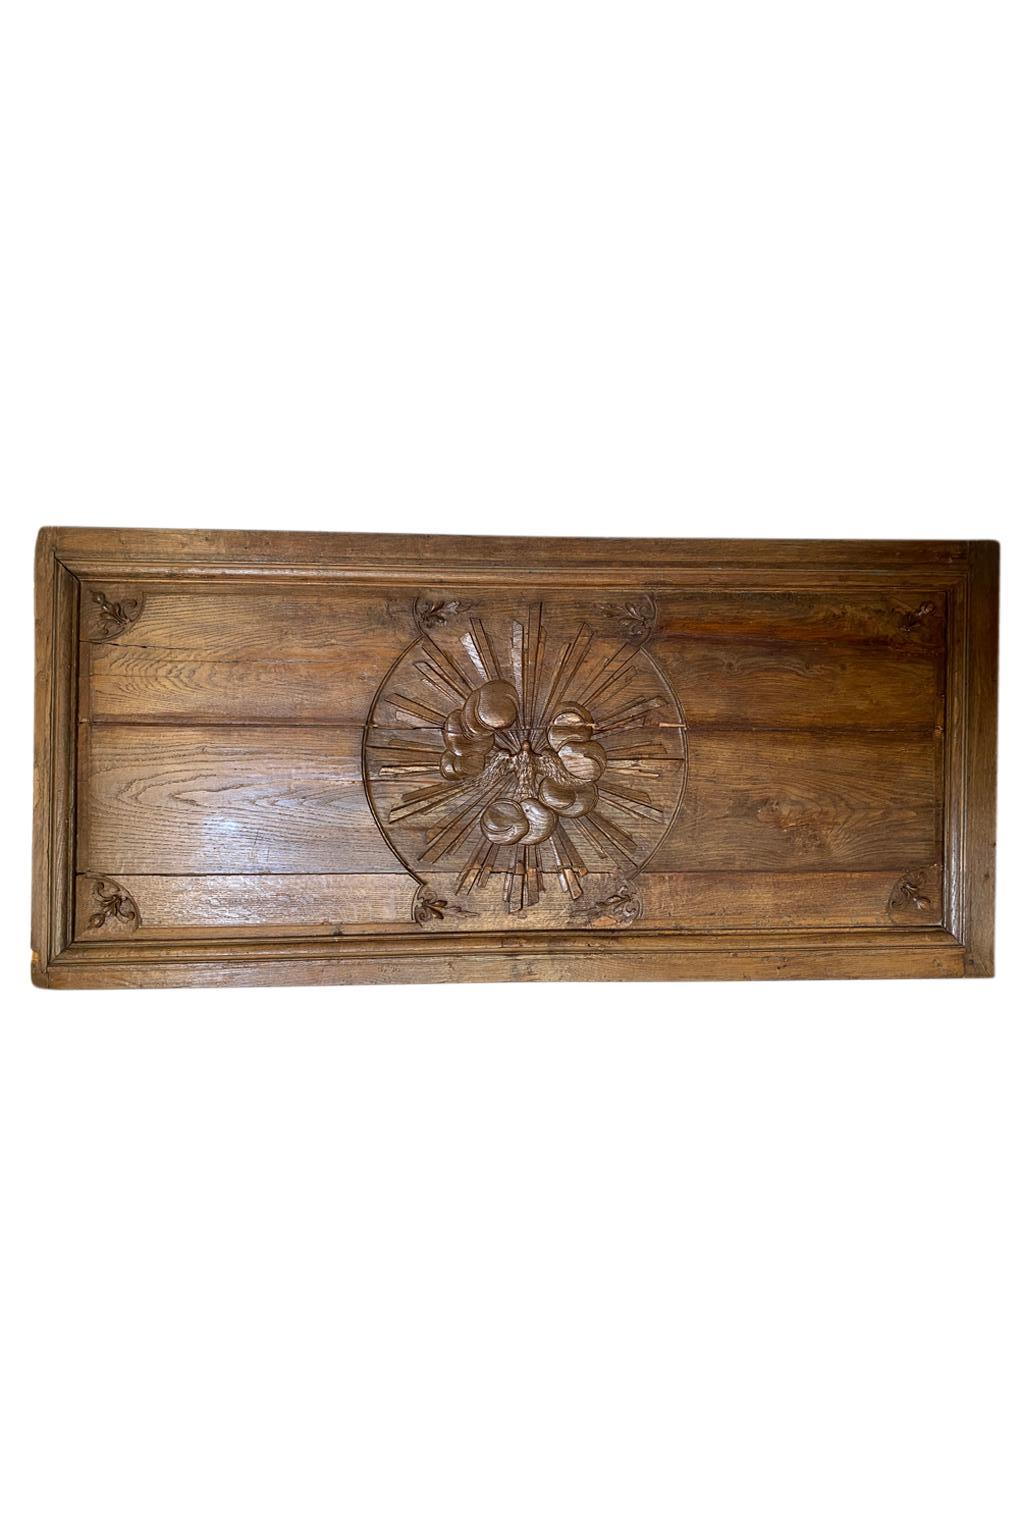 Oak 19th Century French Carved Sunburst Panel For Sale